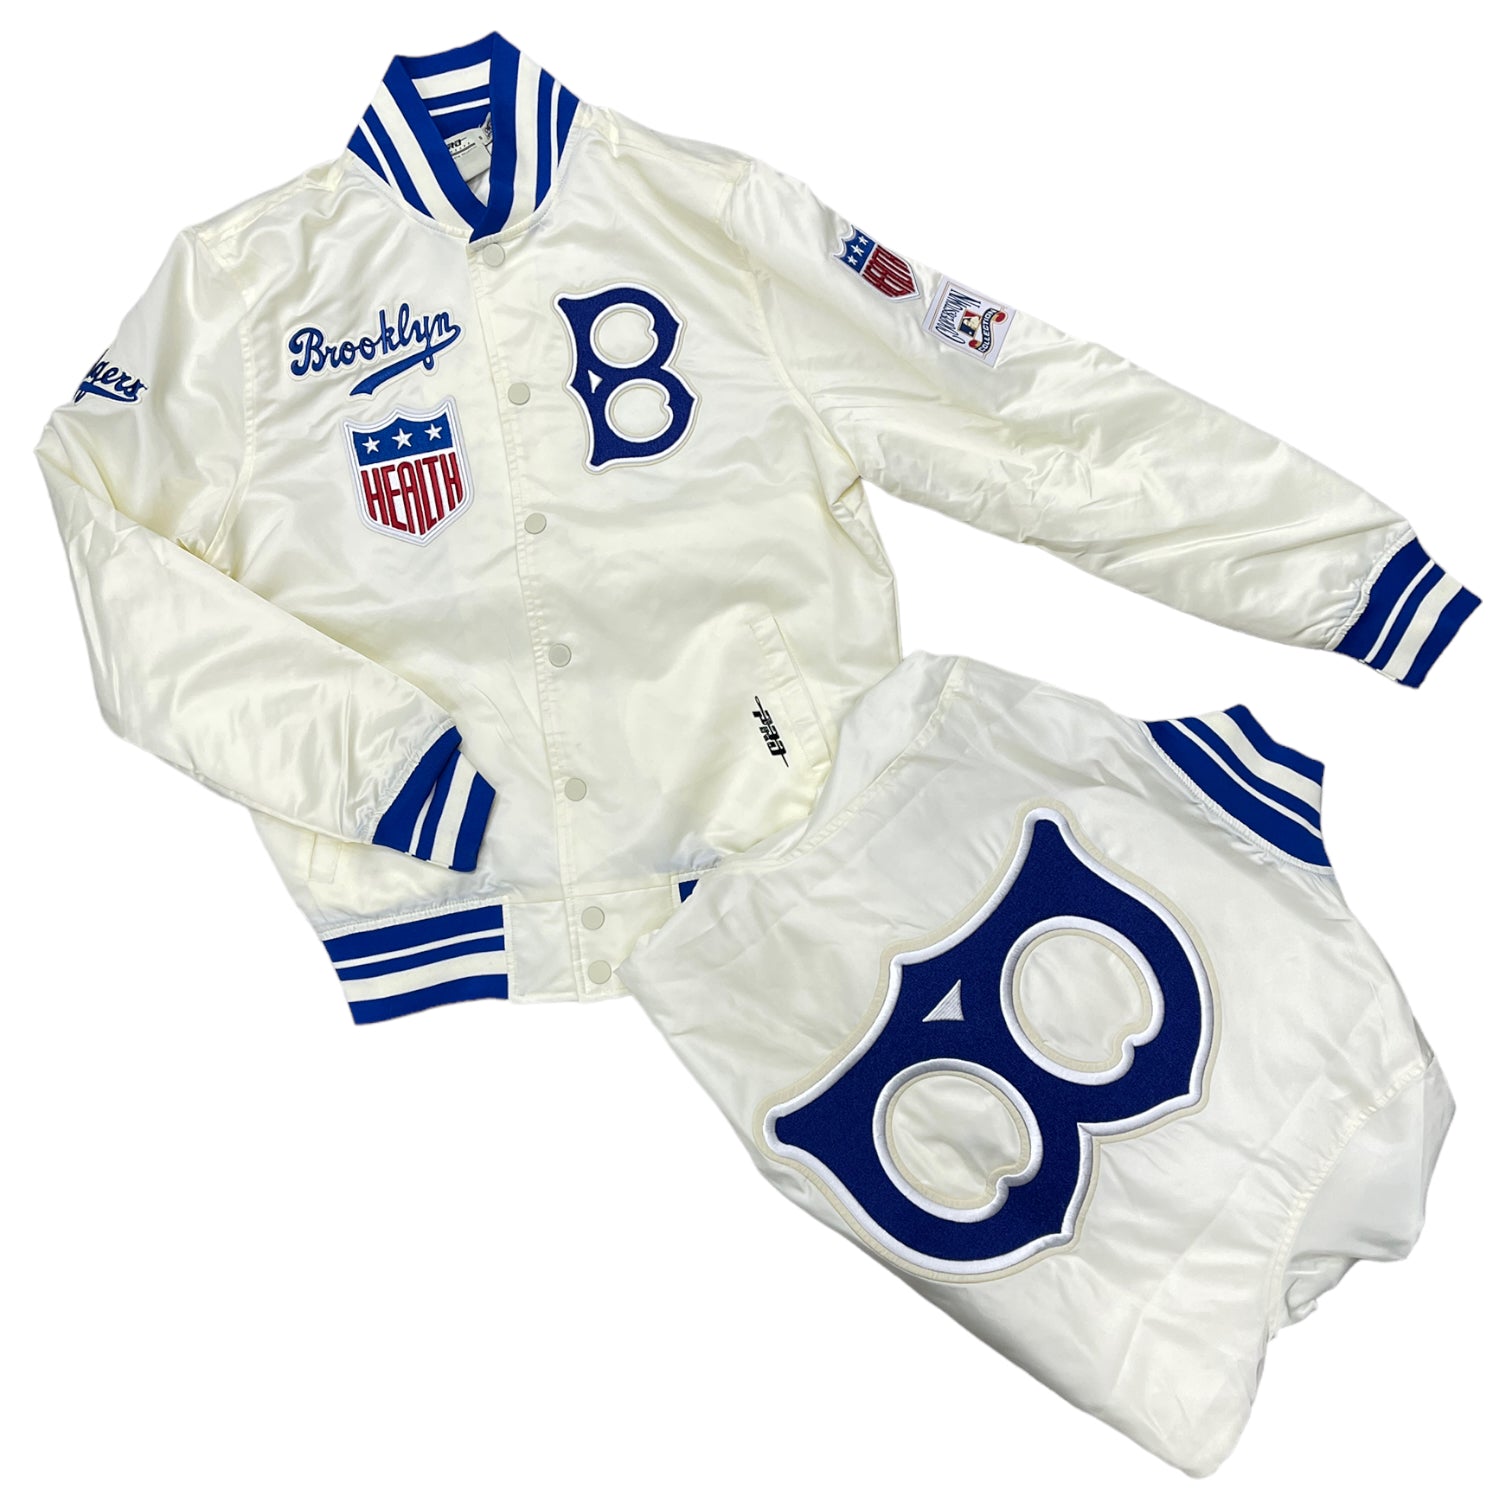 Brooklyn Dodgers Bomber Blue Satin Jacket